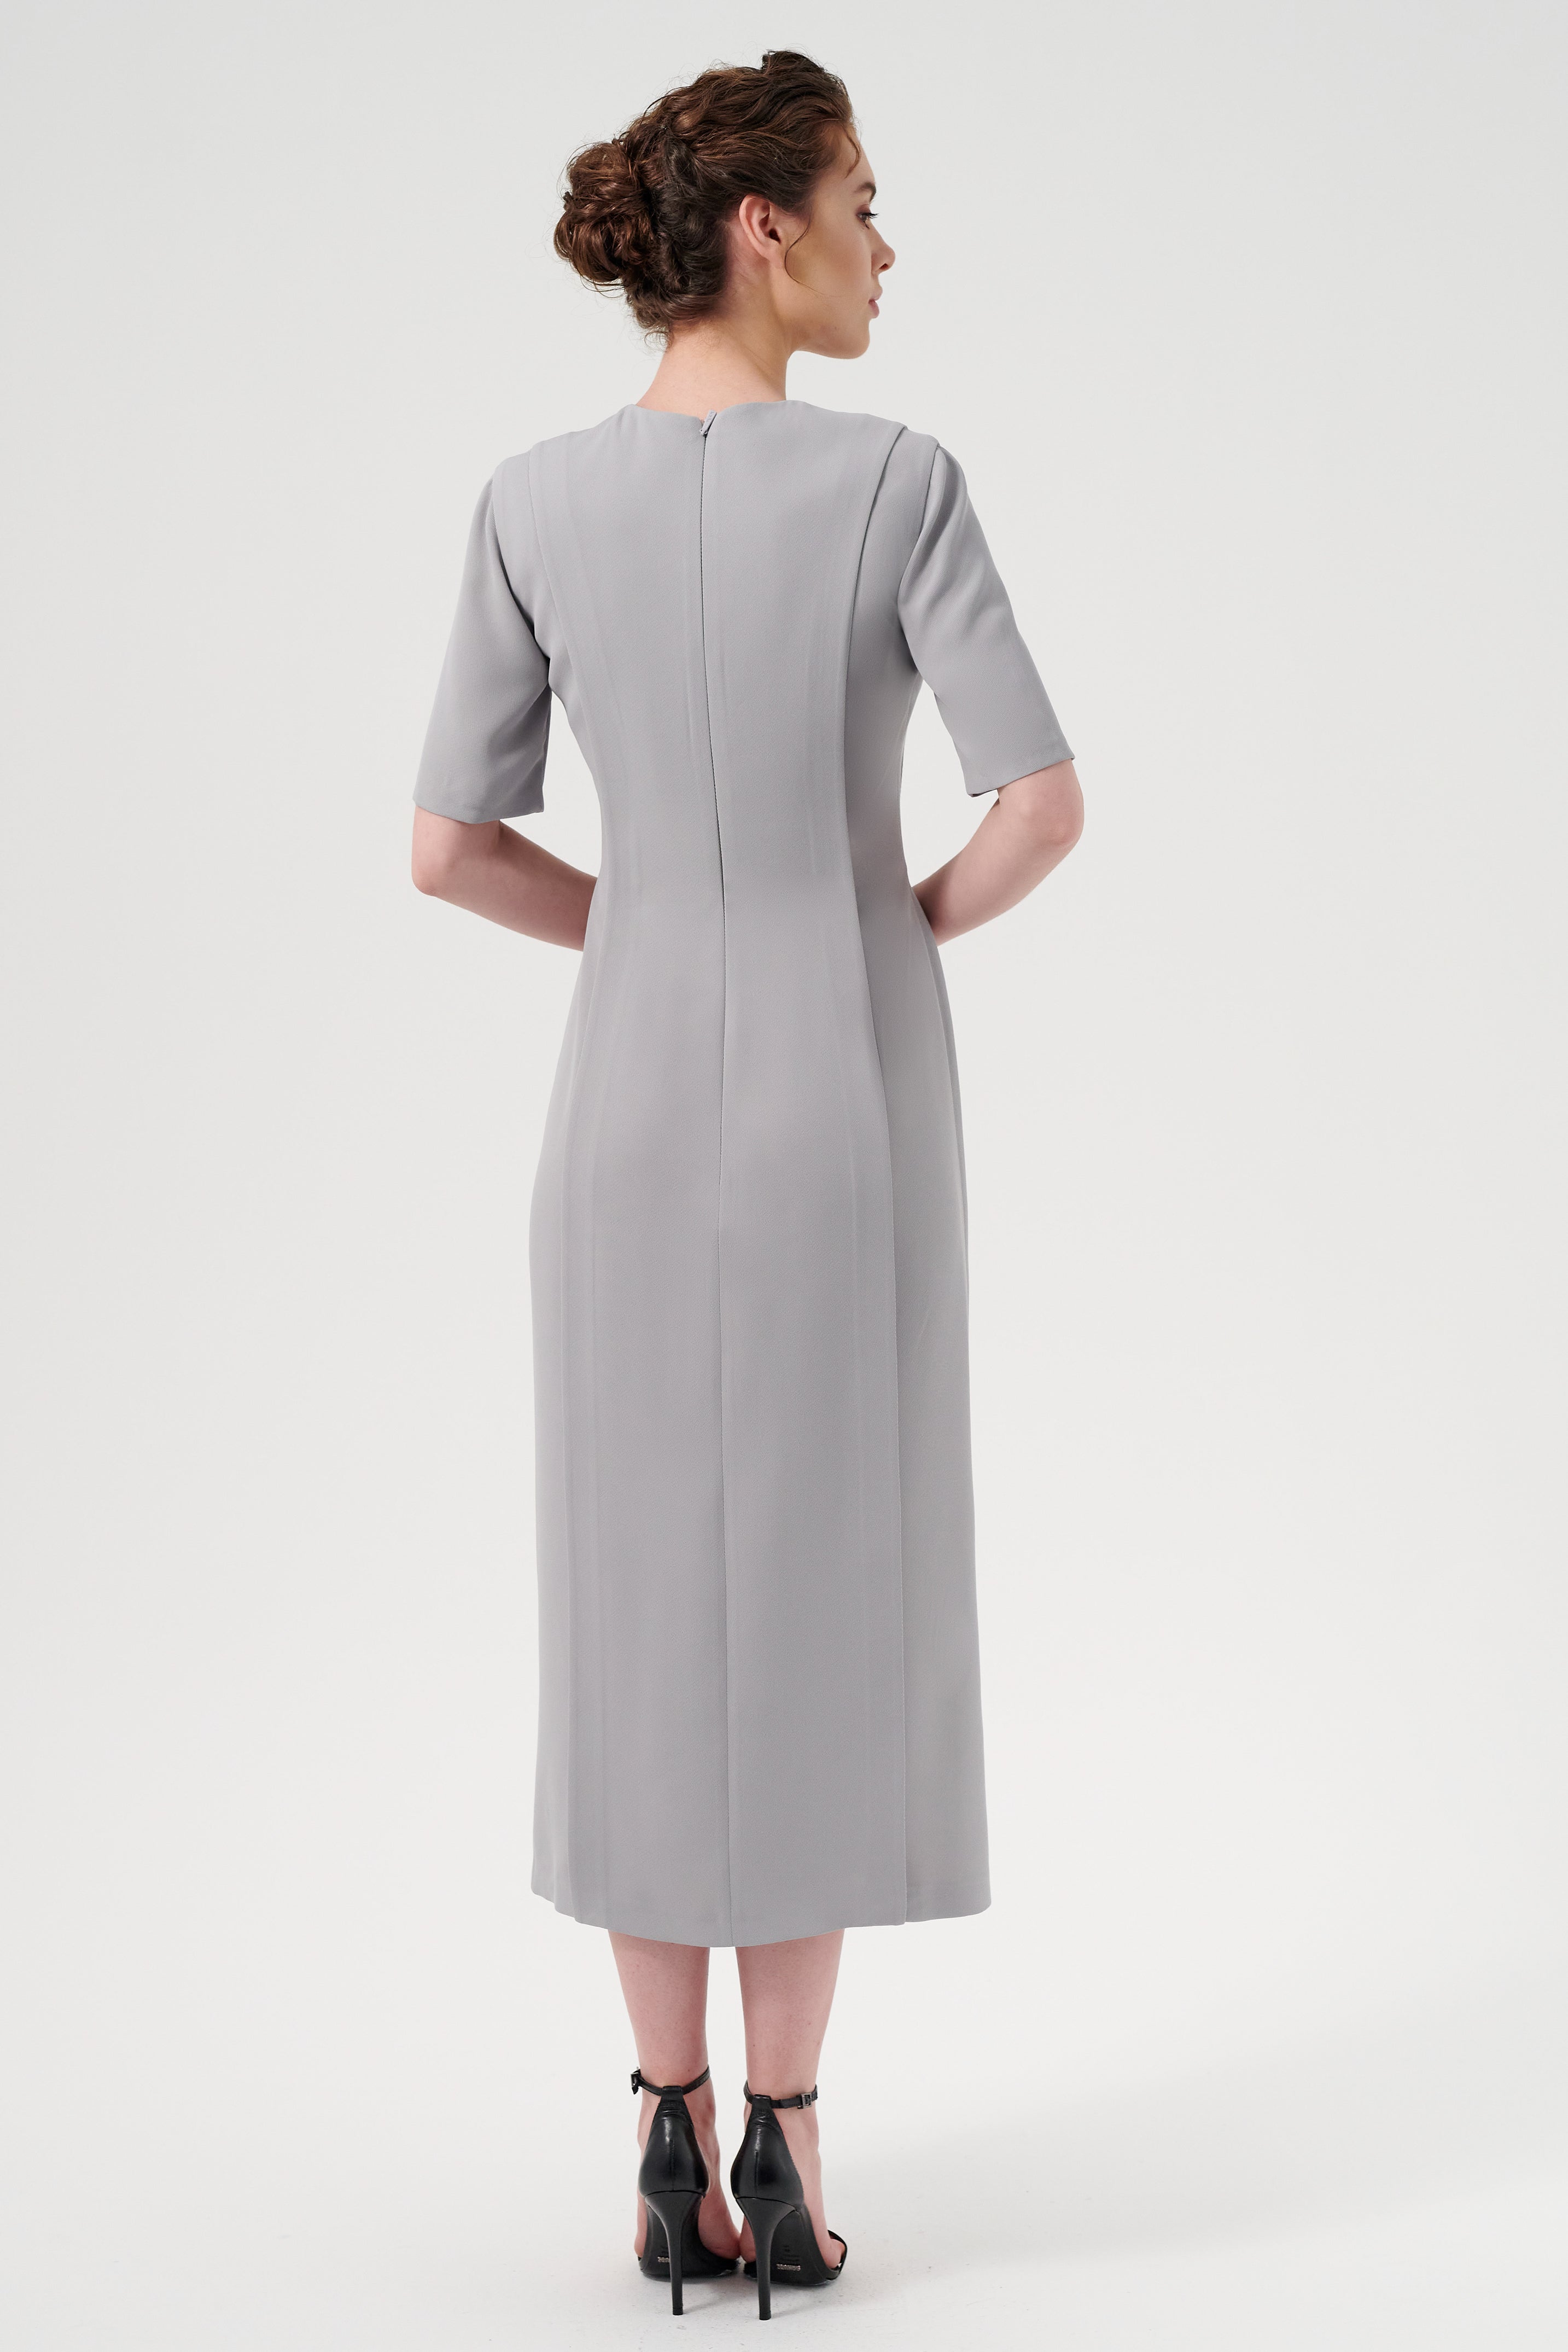 Crew Neck Short Sleeves Midi-Length Elegant Dress